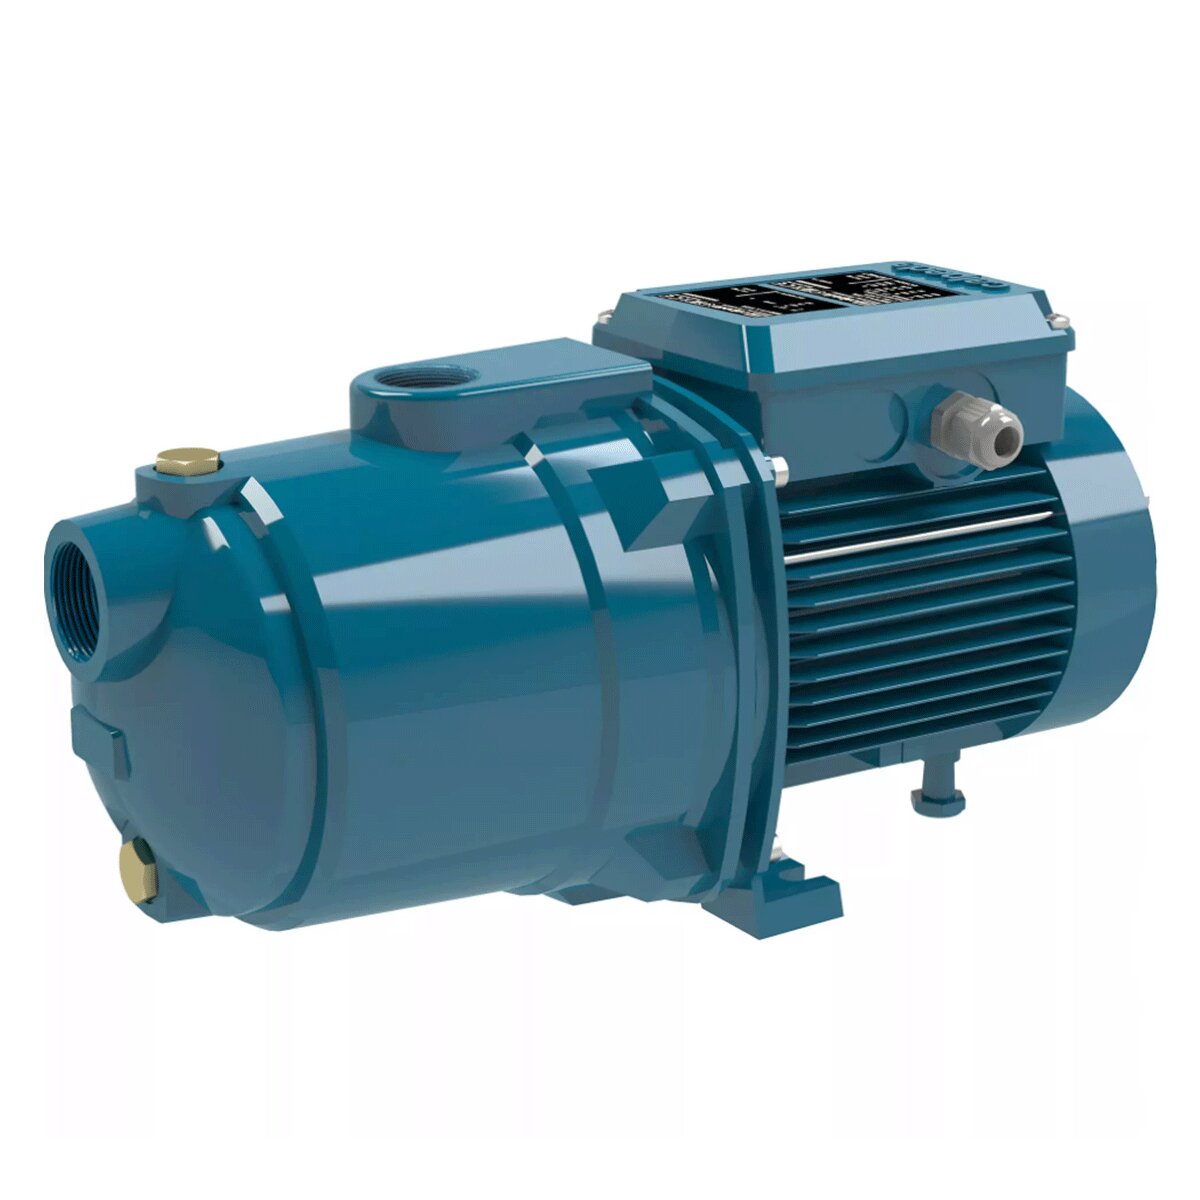 Calpeda MGPM 405 single-phase multi-impeller pump 1.5 HP/1.1 kW